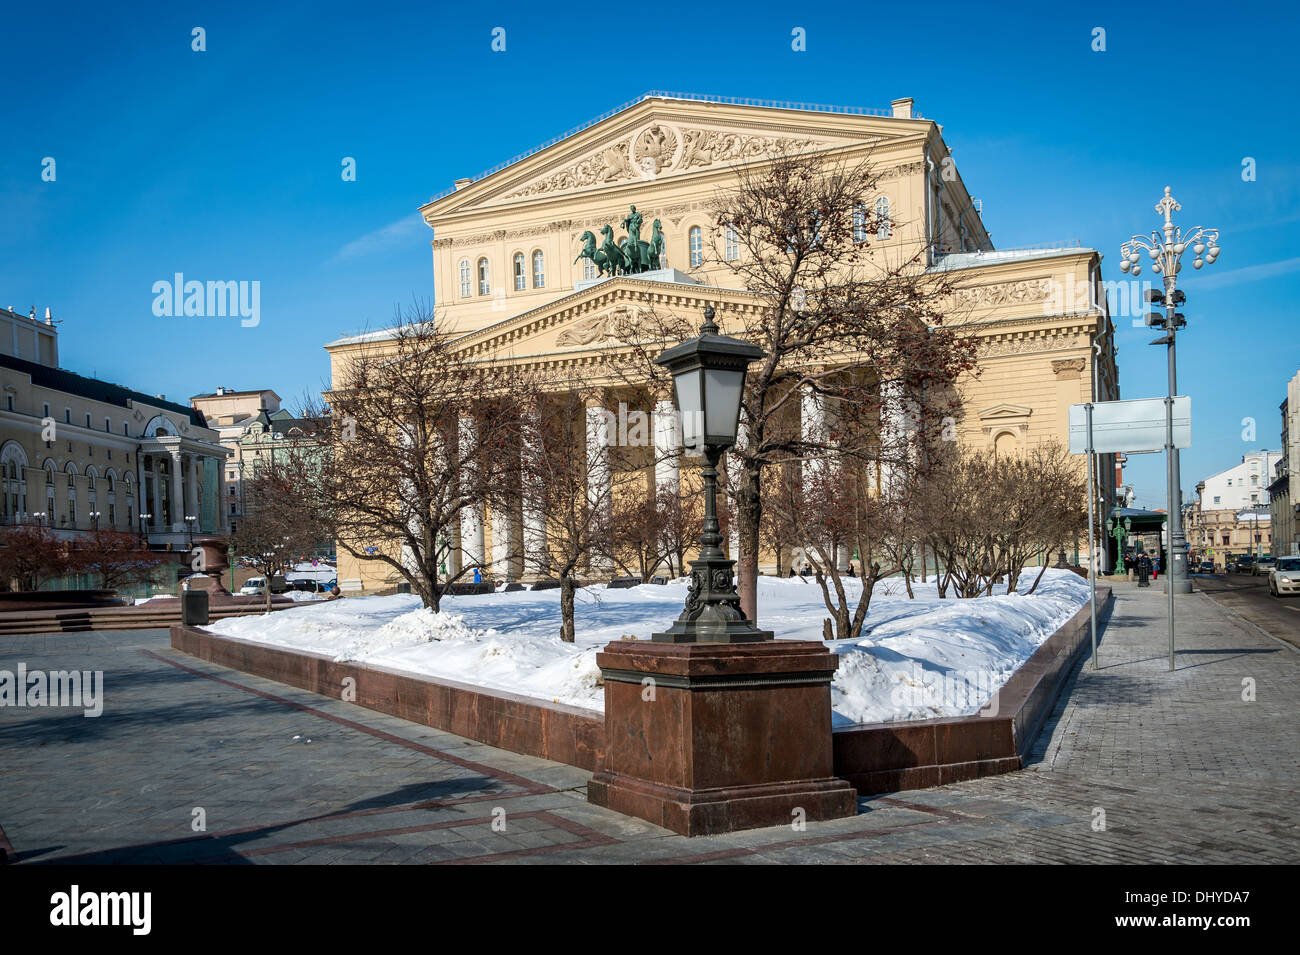 Facade of the Bolshoi Theater in Moscow Stock Photo